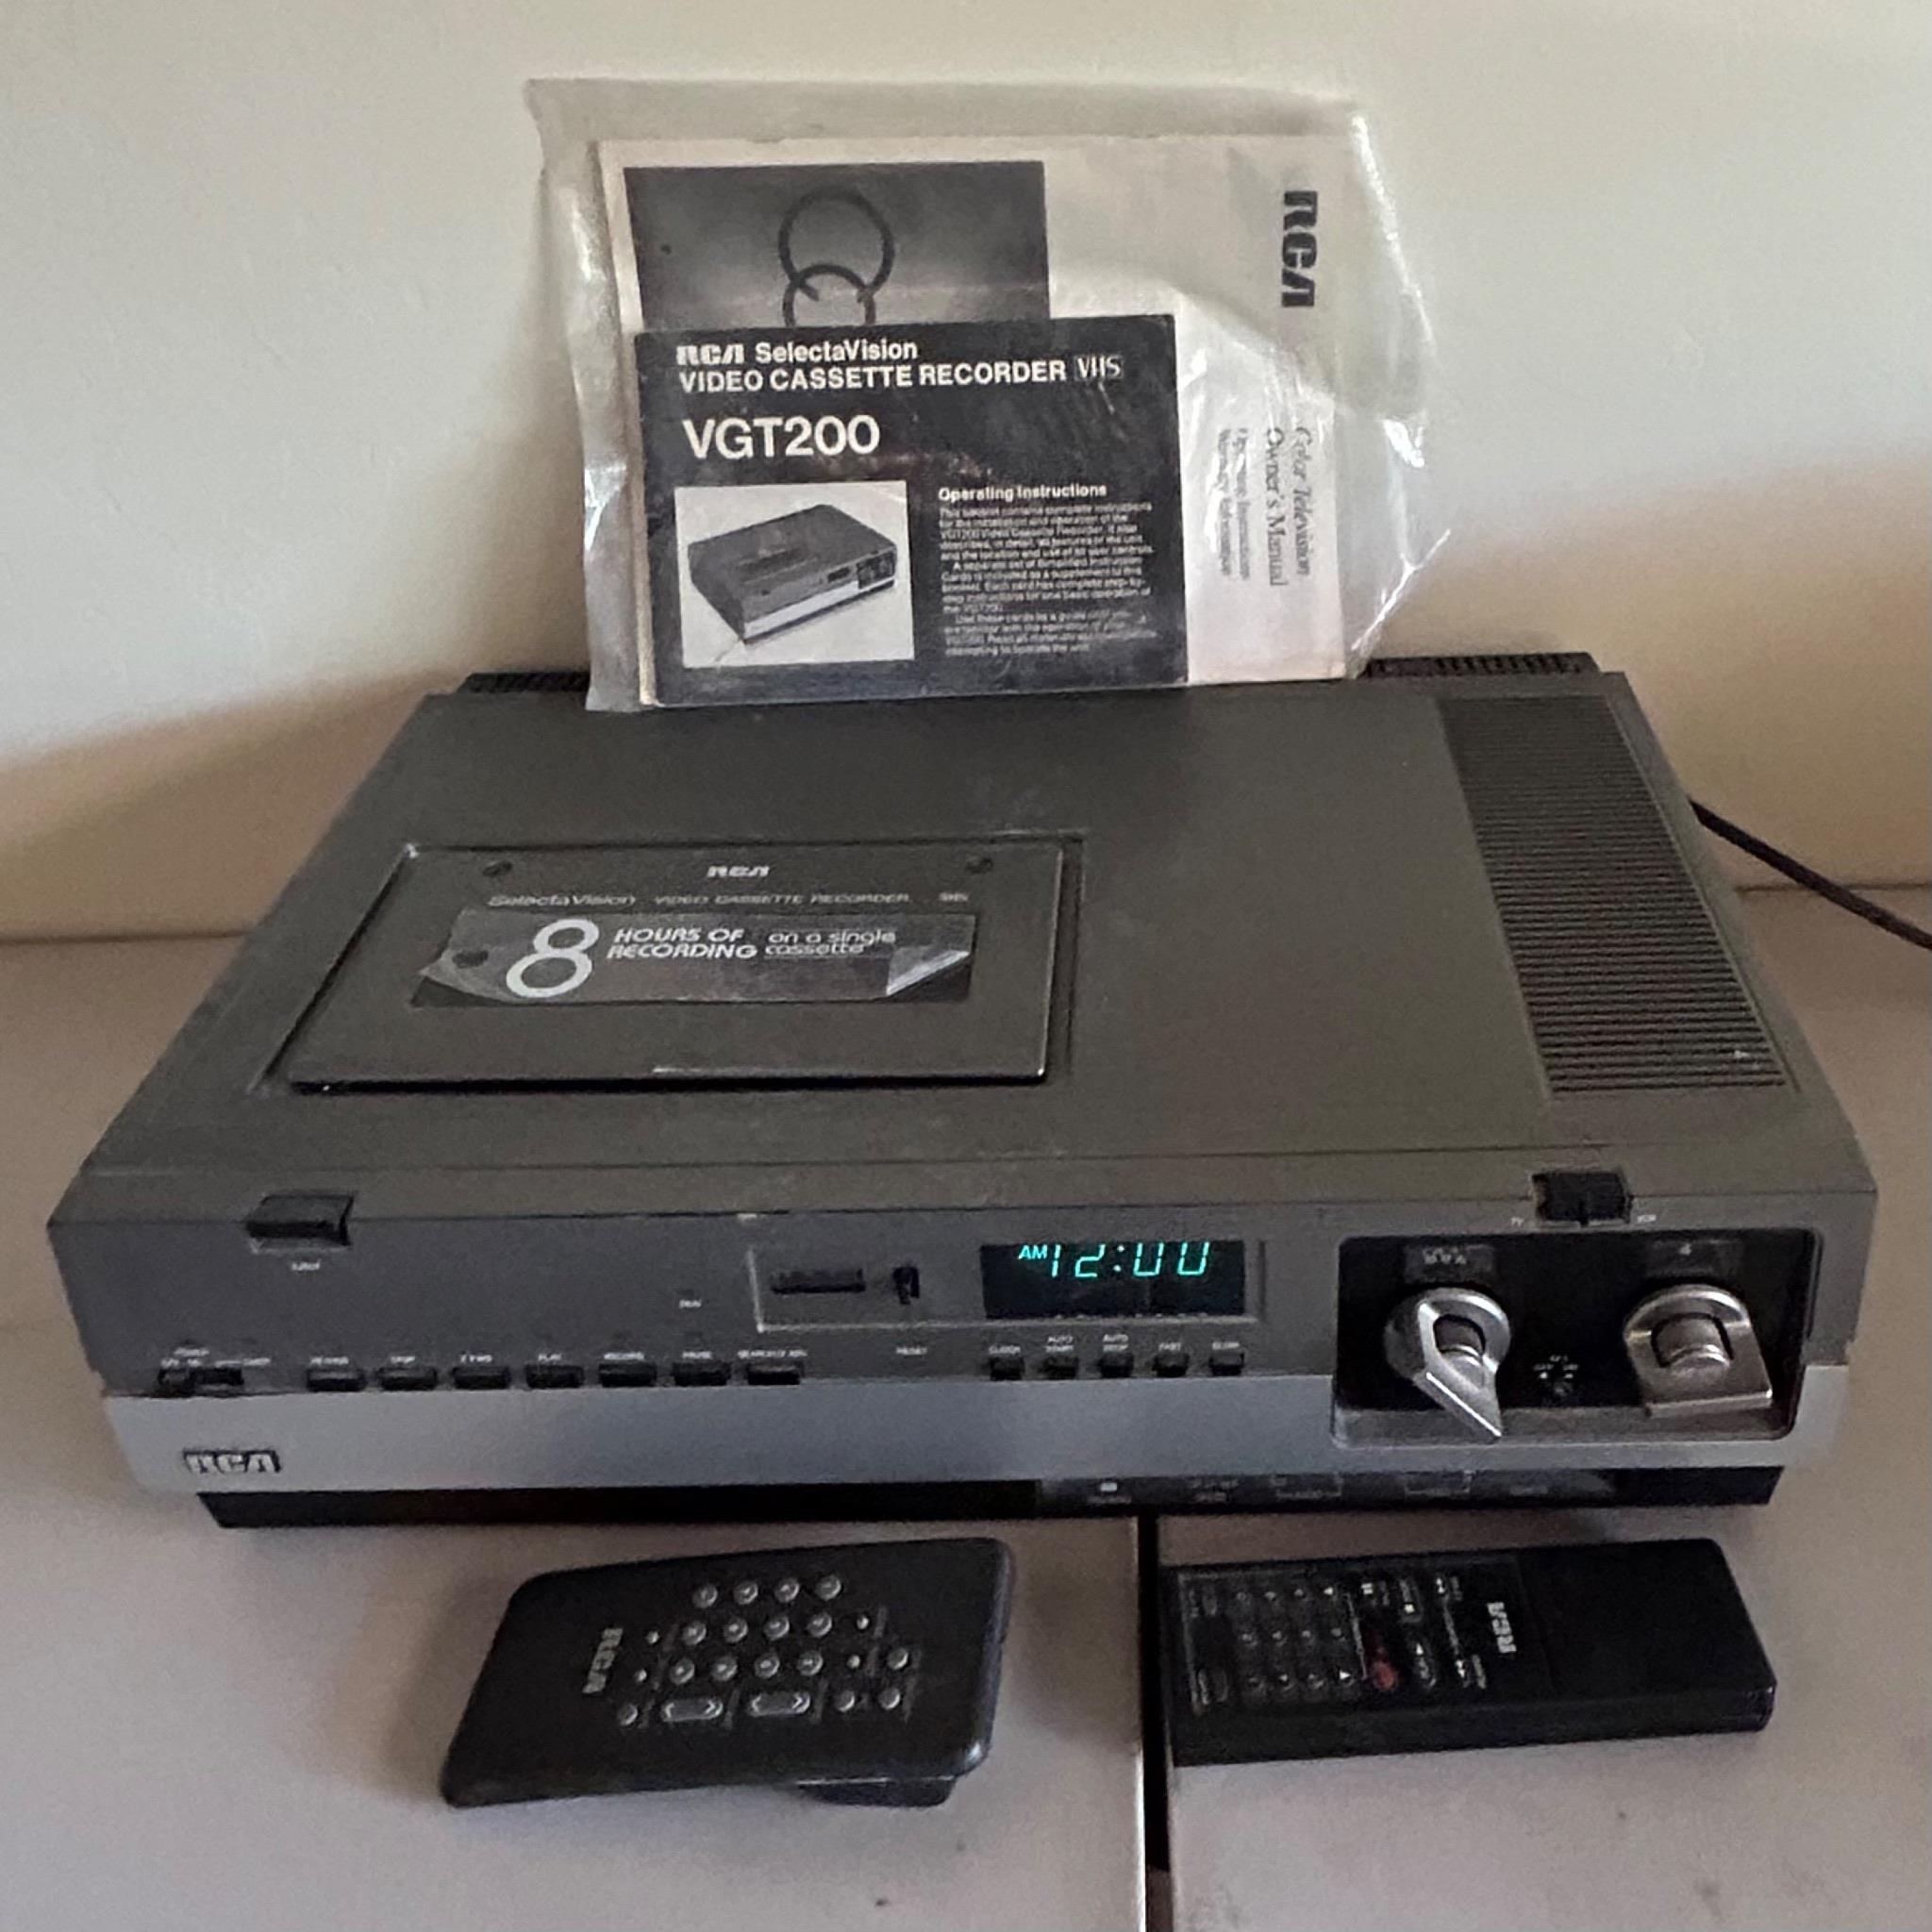 RCA Video Cassette Recorder VGT200